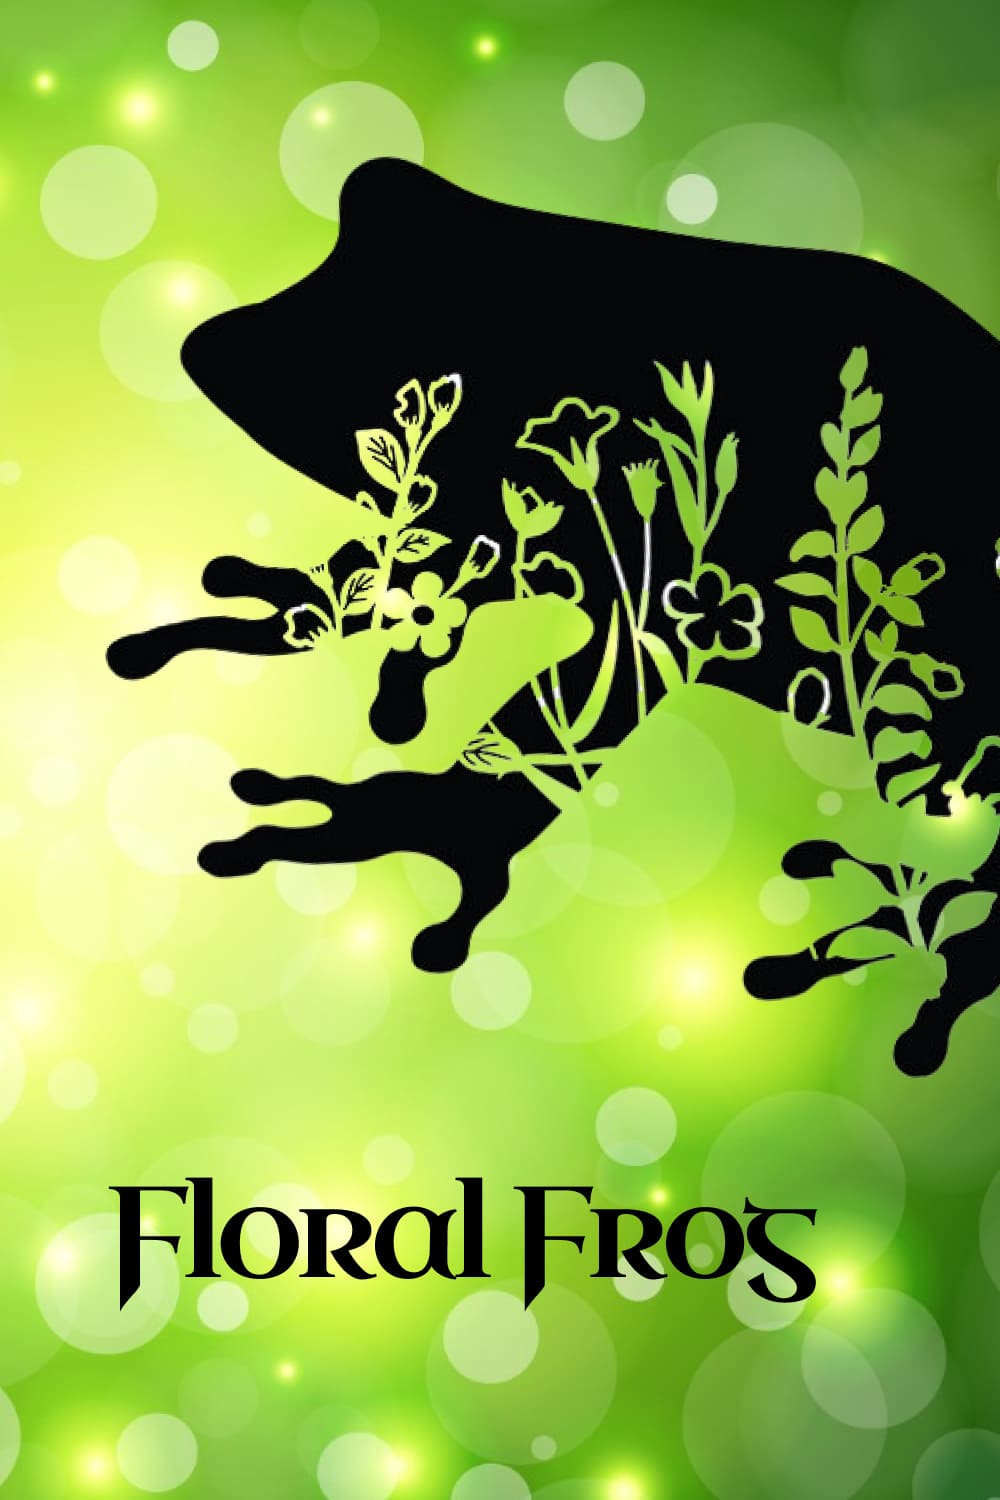 Floral Frog SVG Flowers Frog Clipart - Pinterest Image Preview.